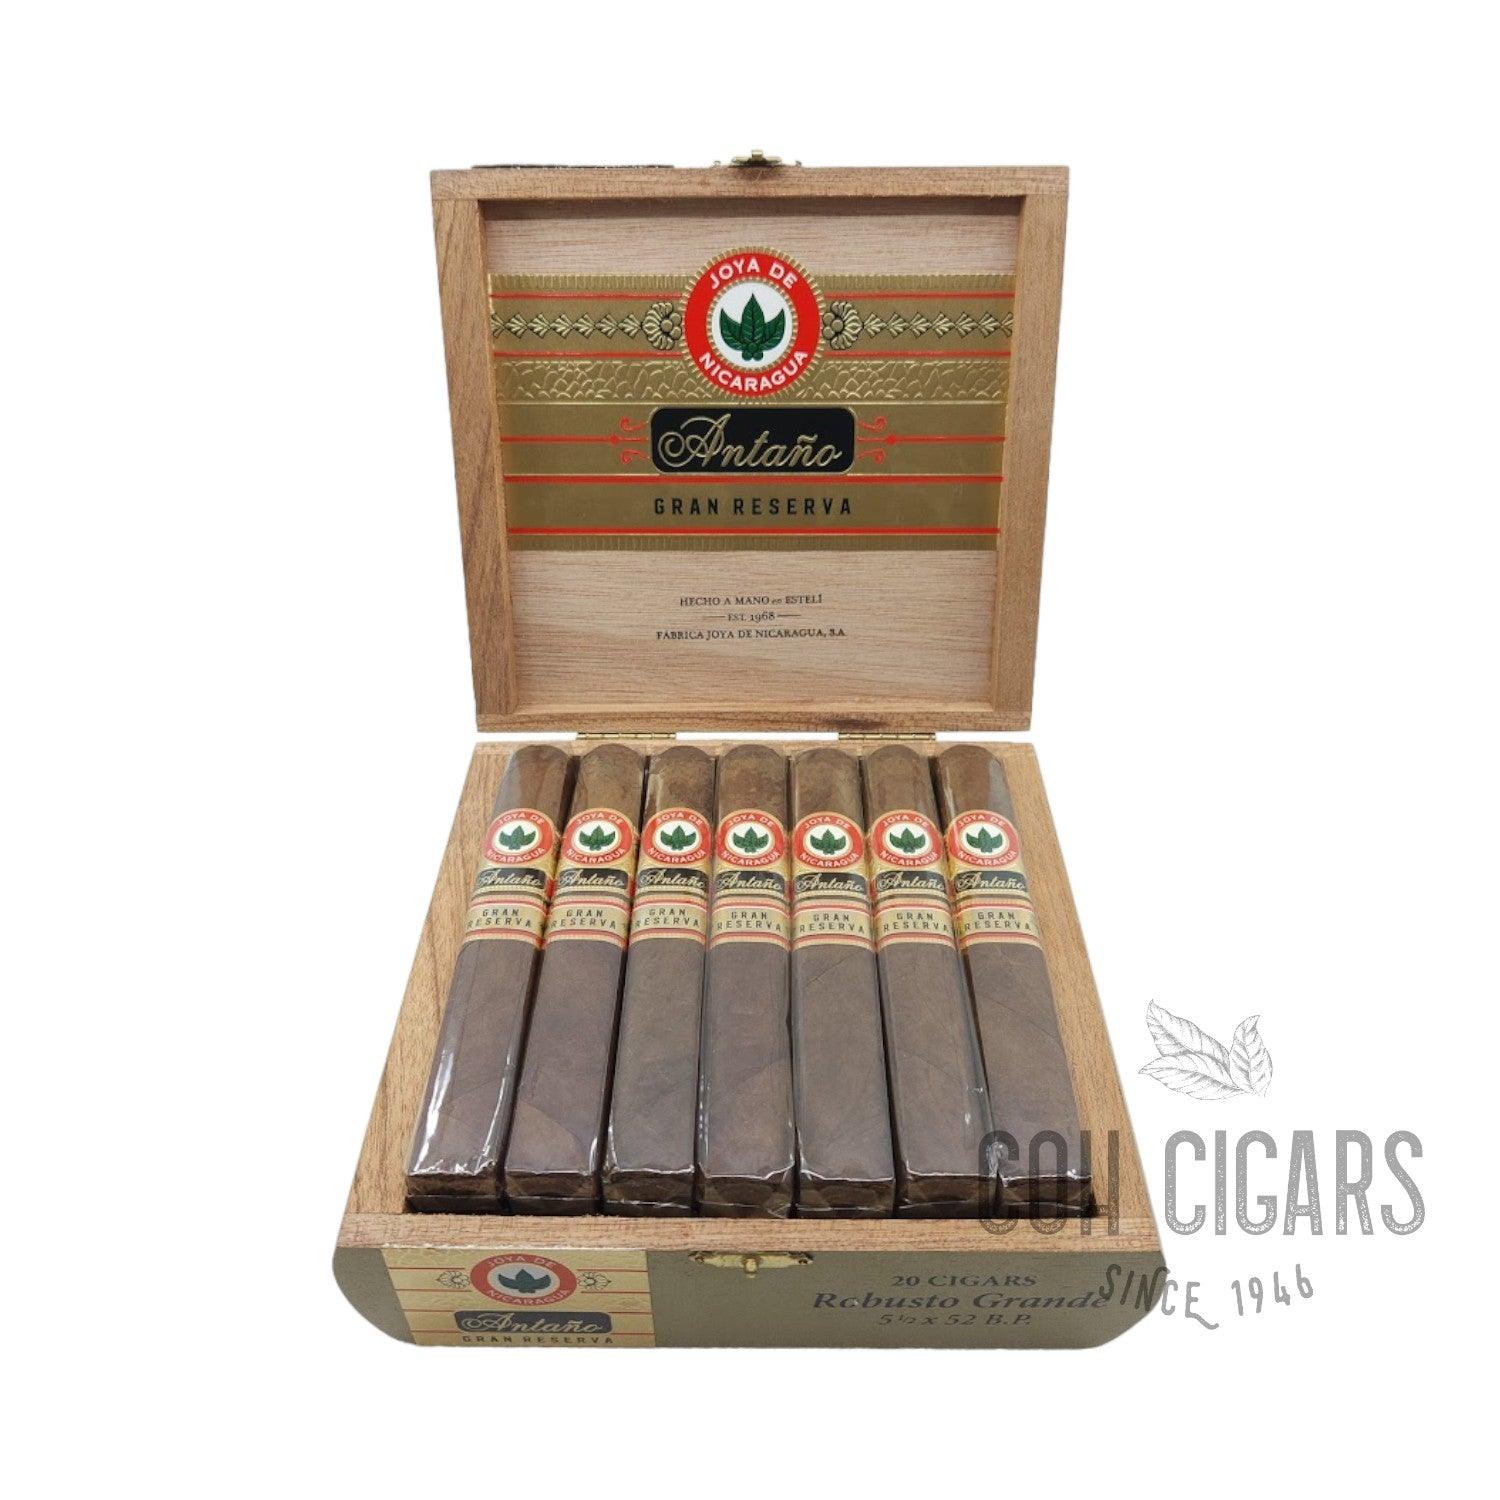 Joya De Nicaragua Cigar | Antano Gran Reserva Robusto Grande | Box 20 - hk.cohcigars